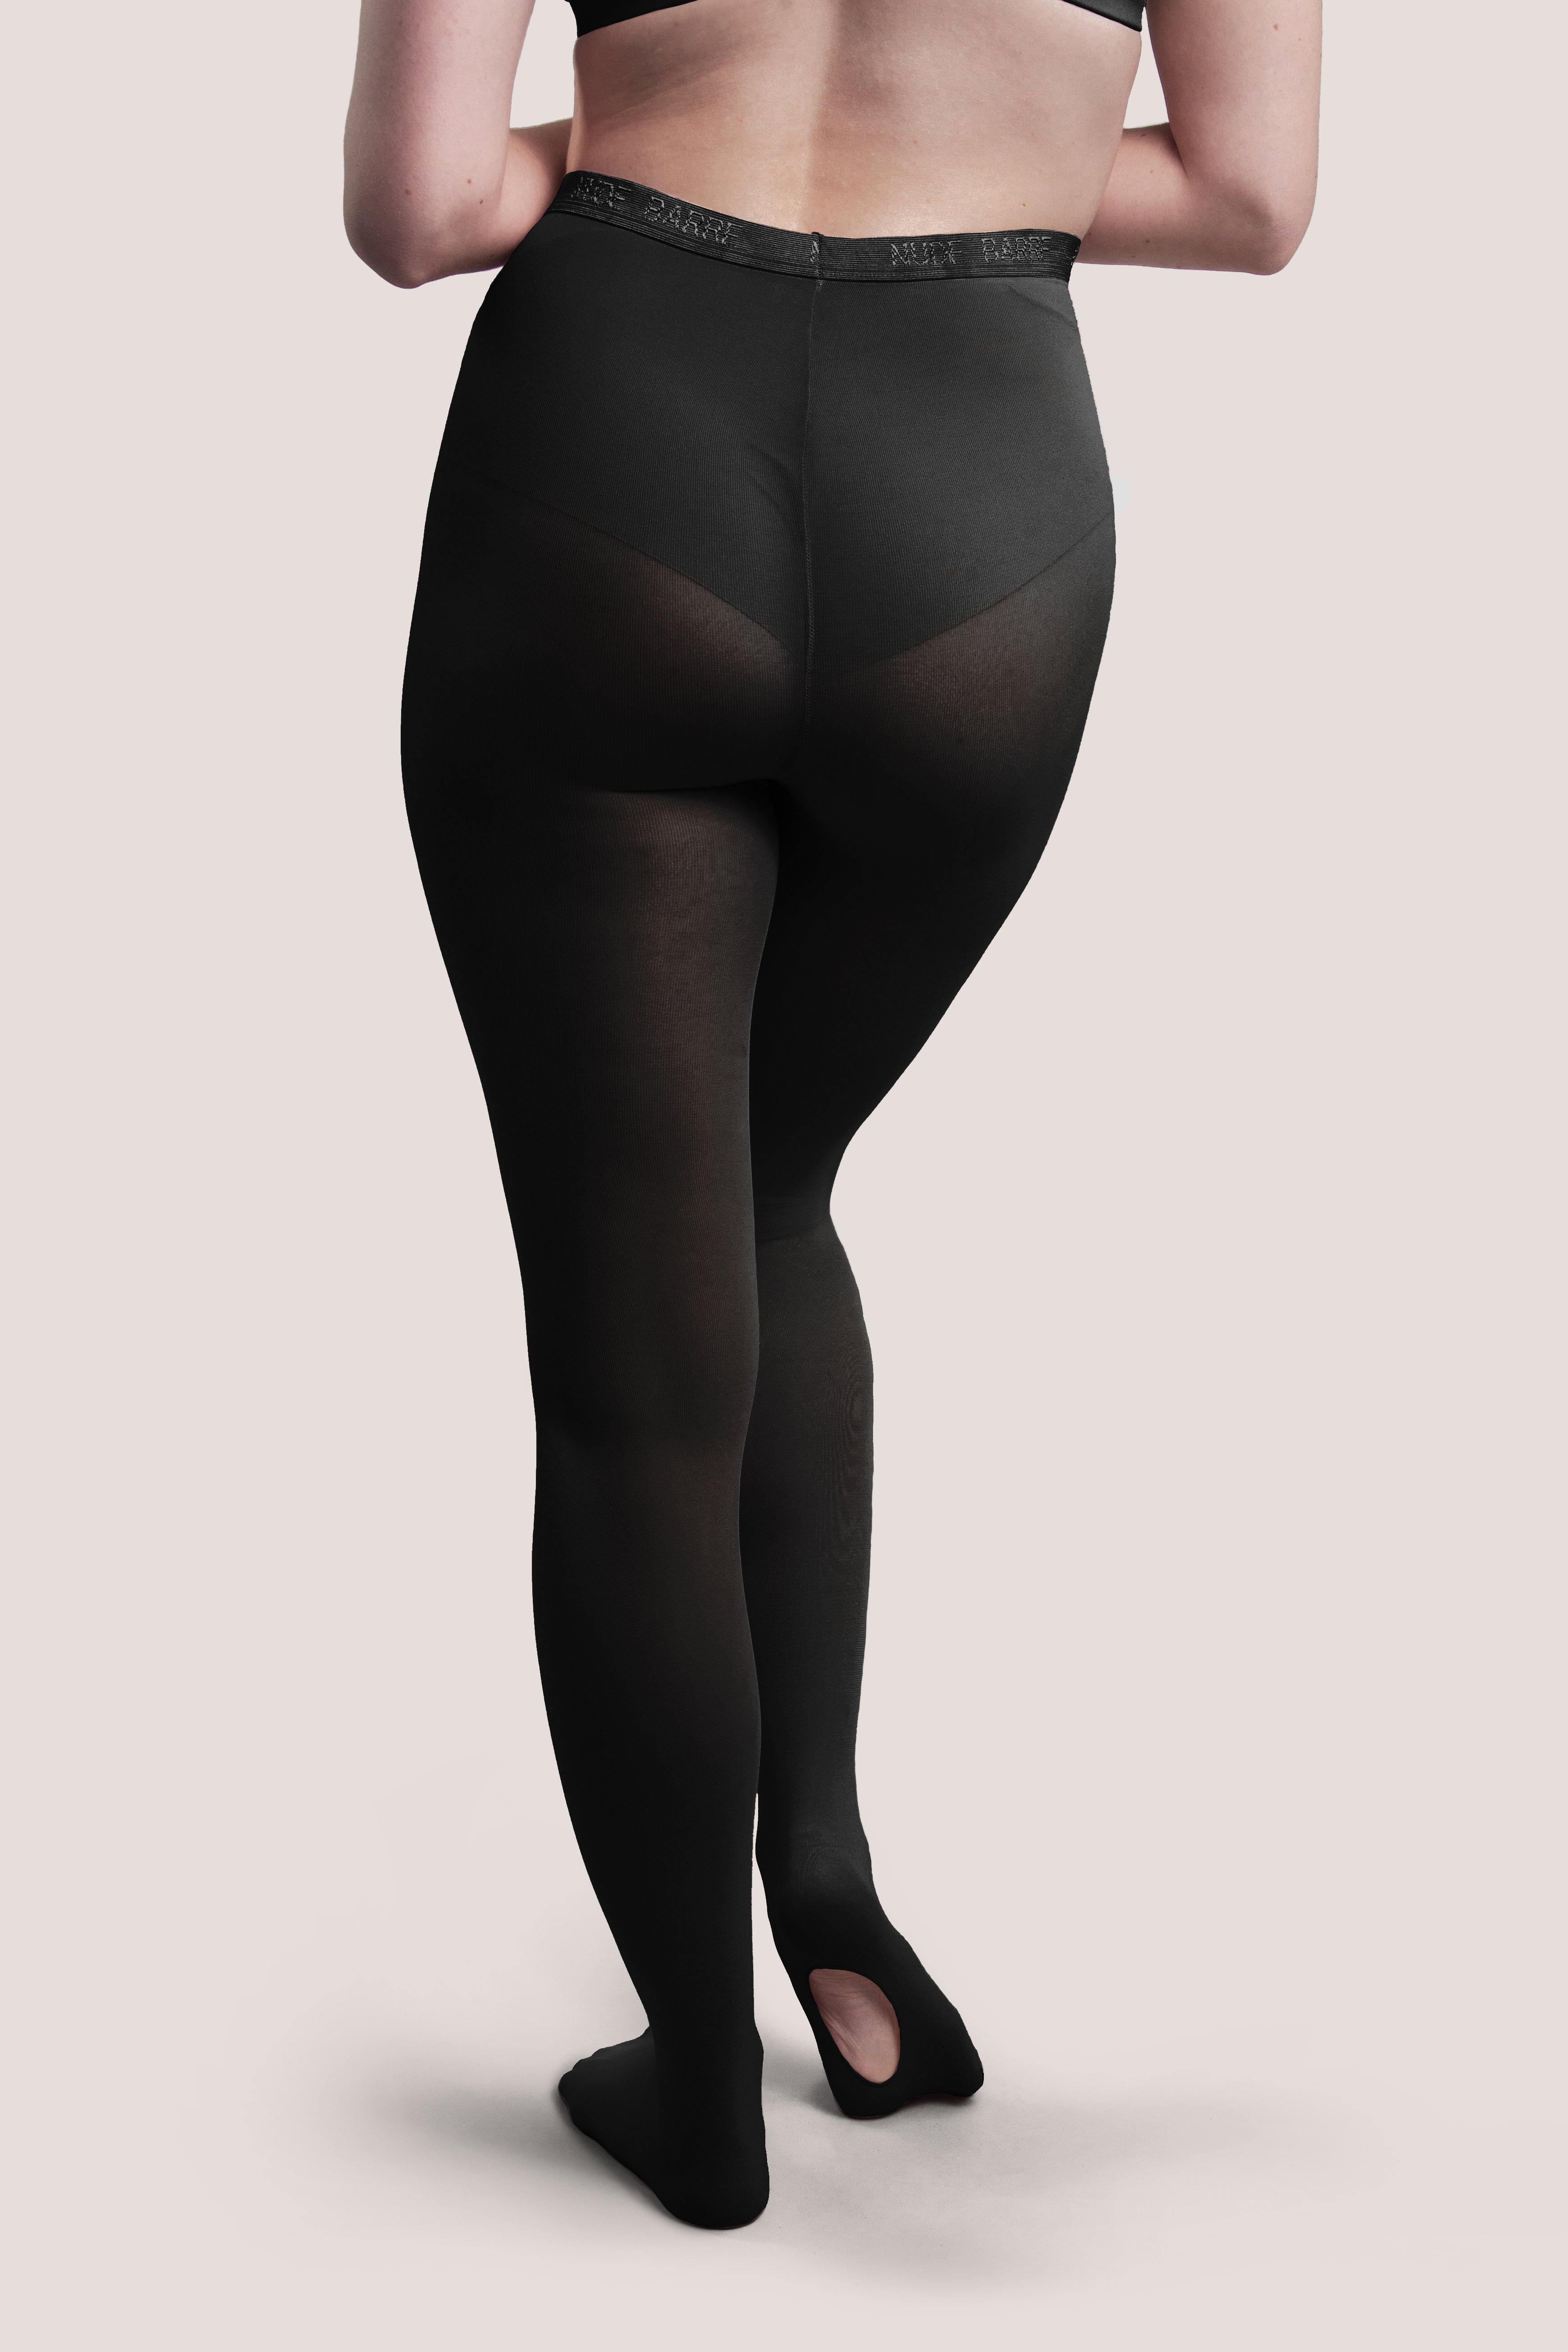 Mature black women in stockings-penty photo